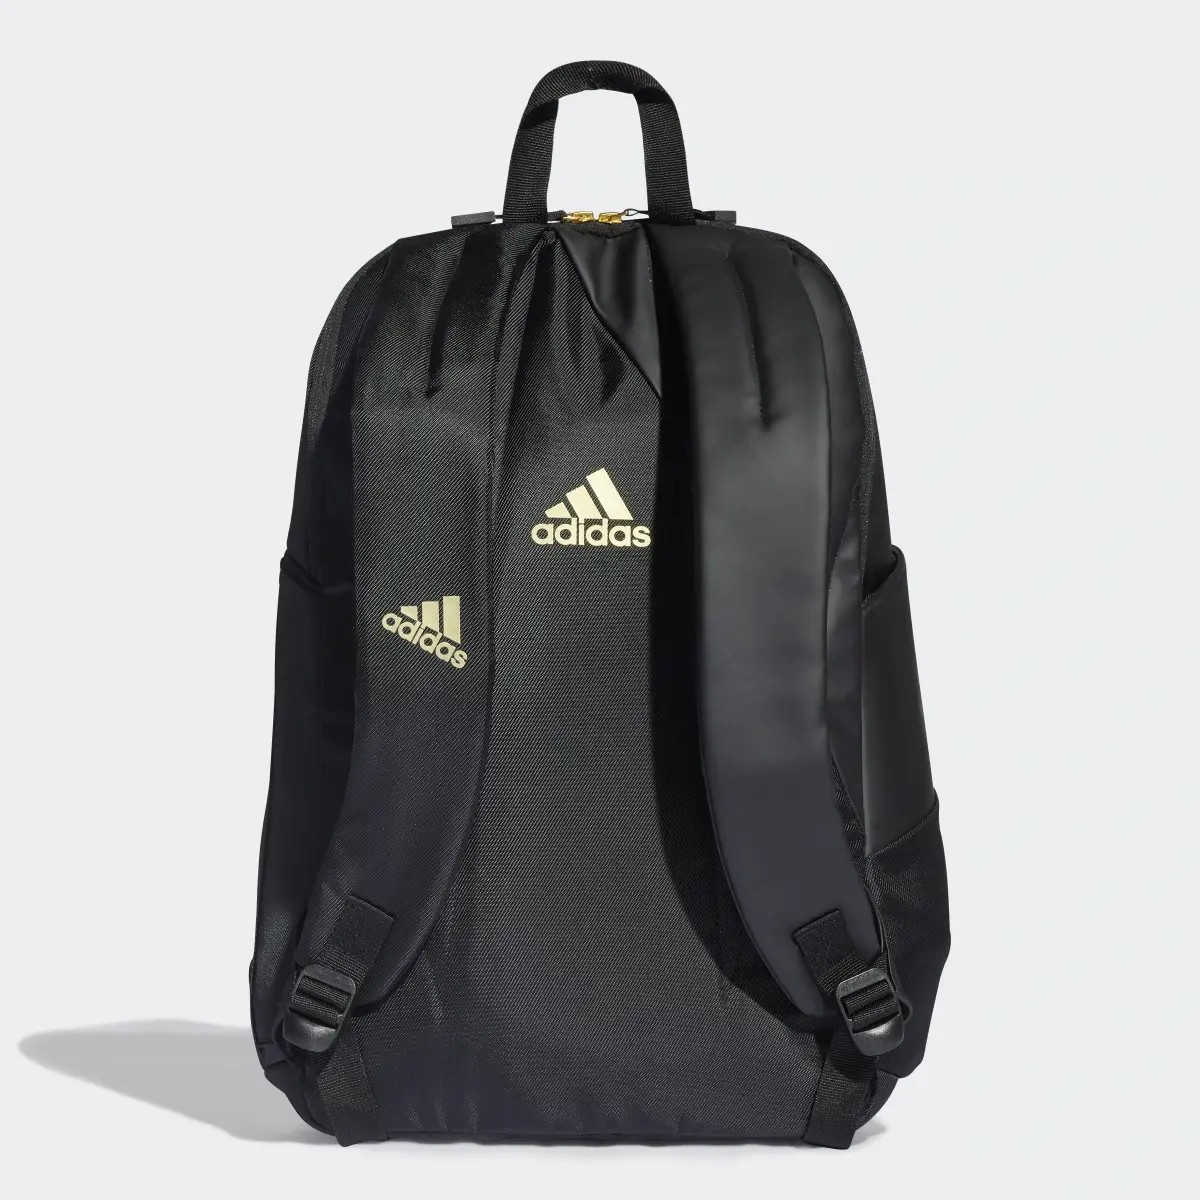 Adidas VS.6 Black/Gold Backpack. 3